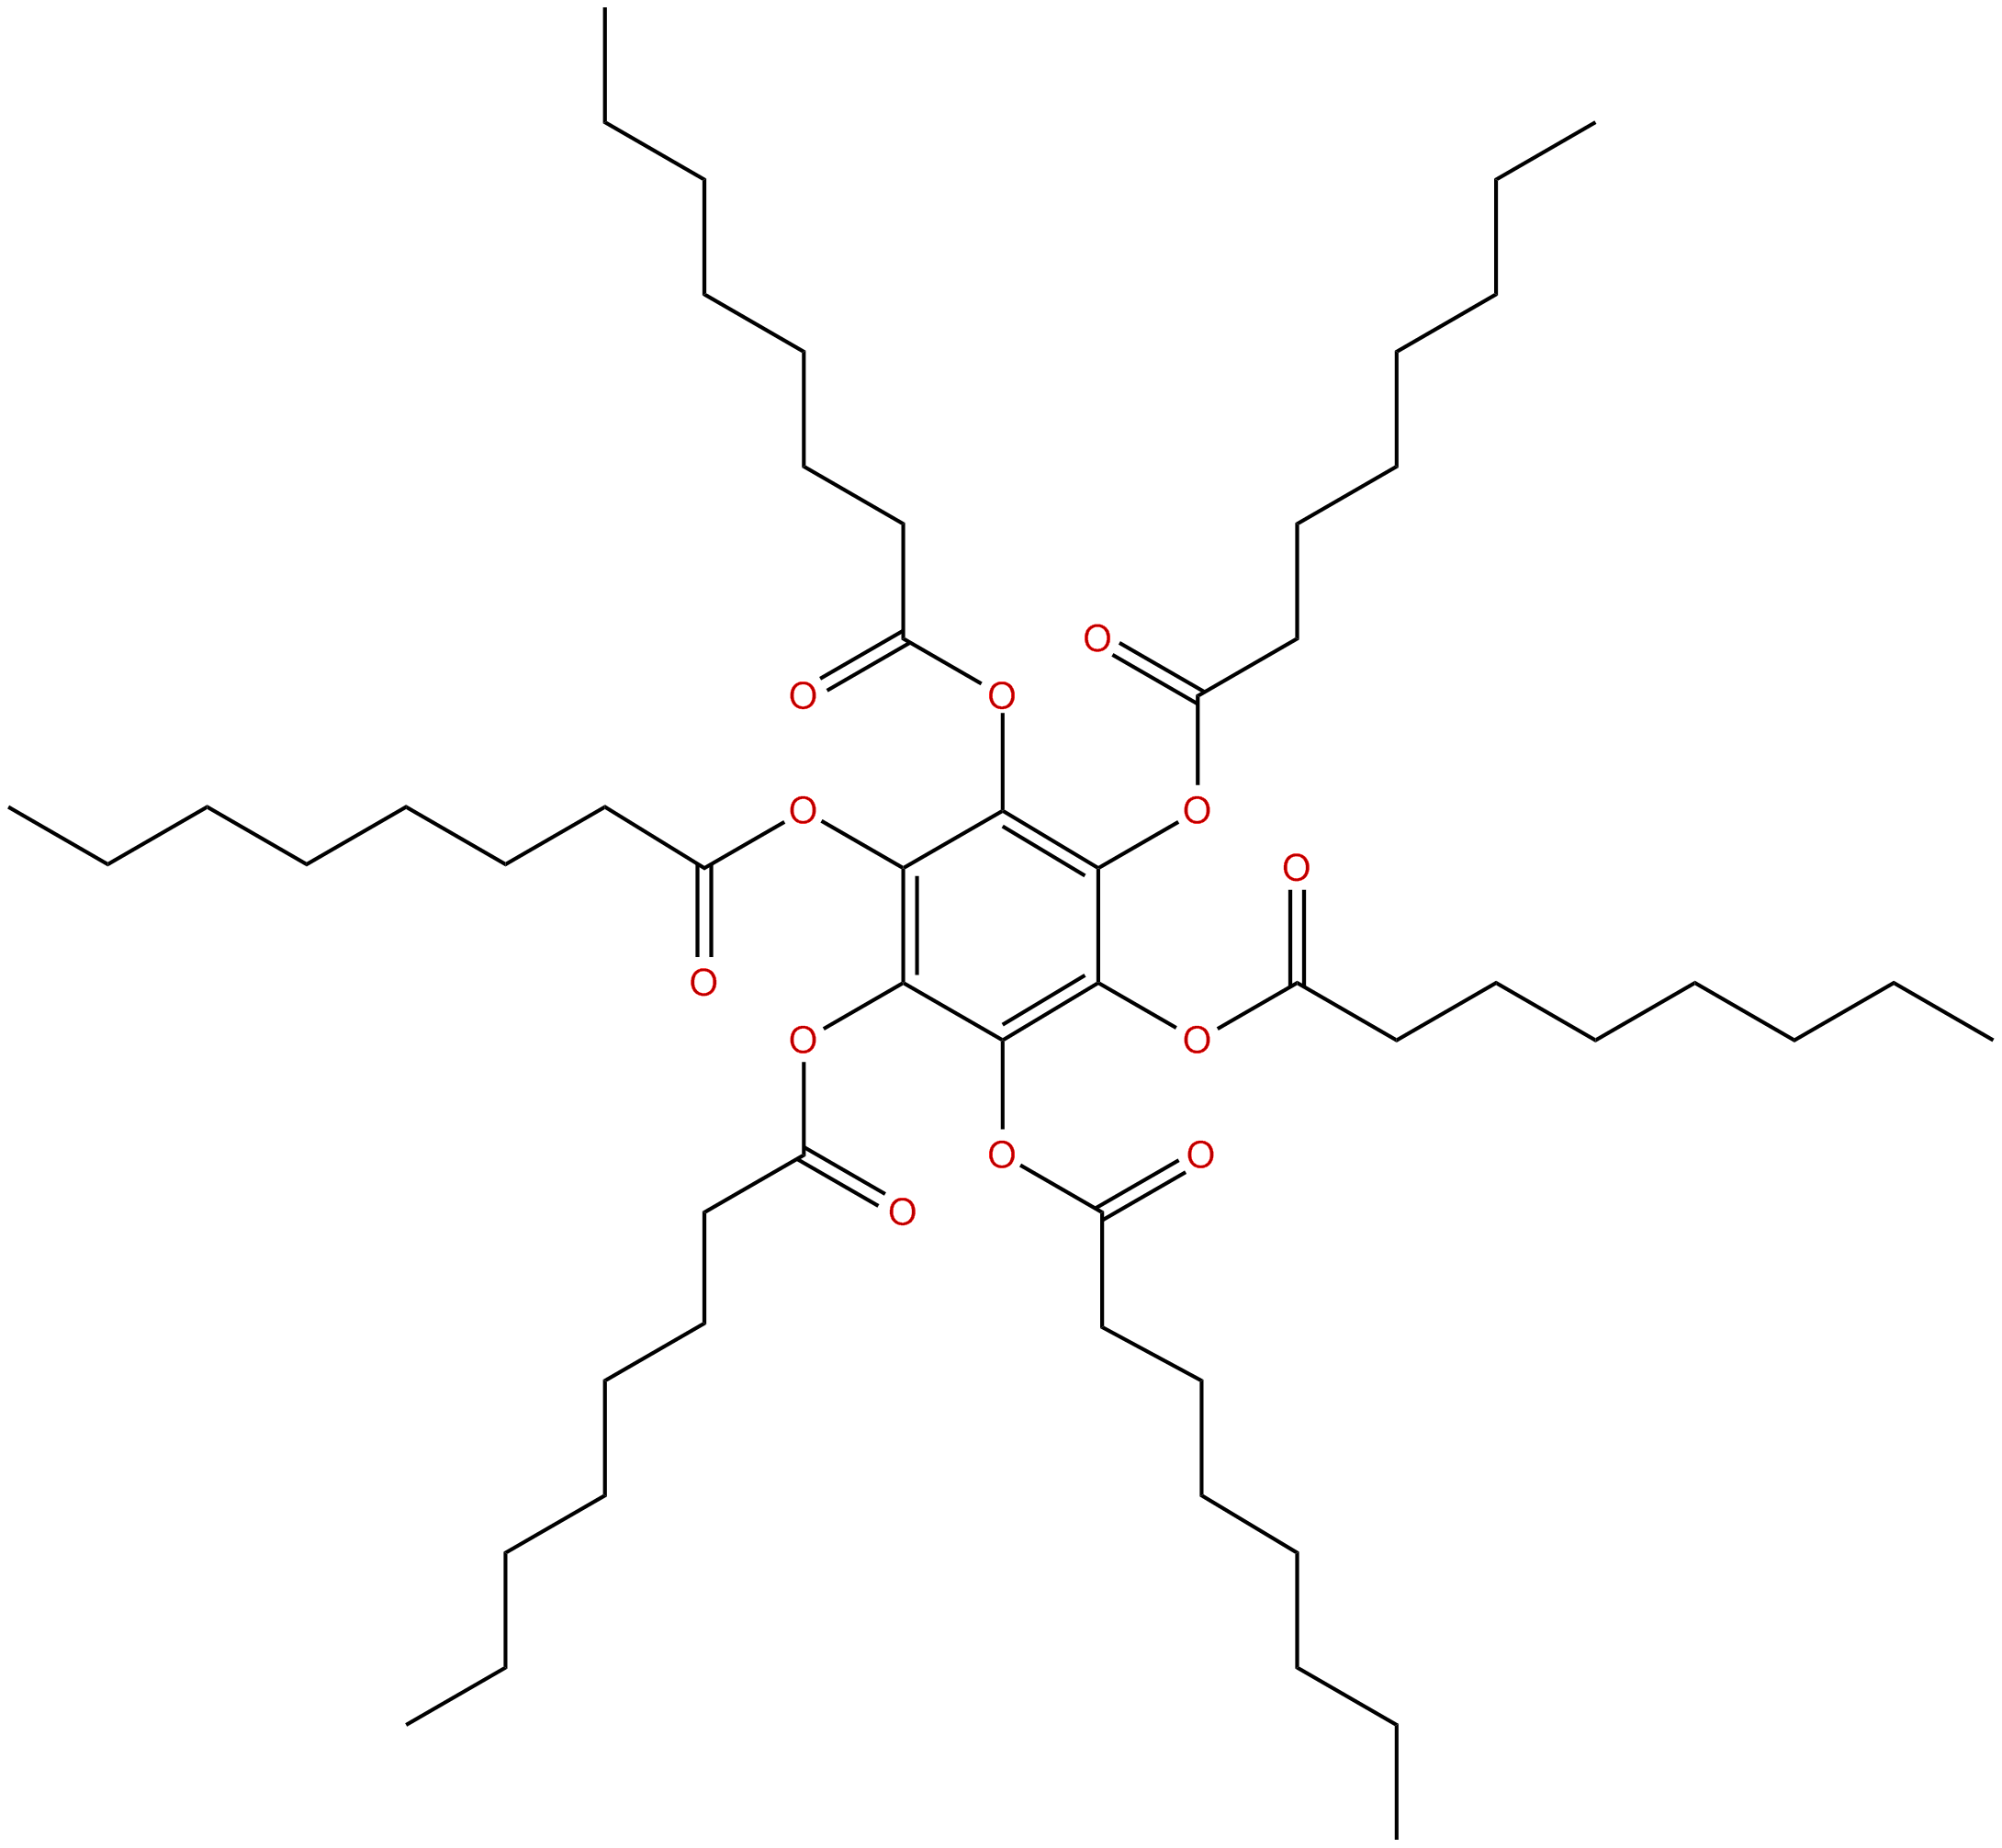 Image of benzene hexaoctanoate